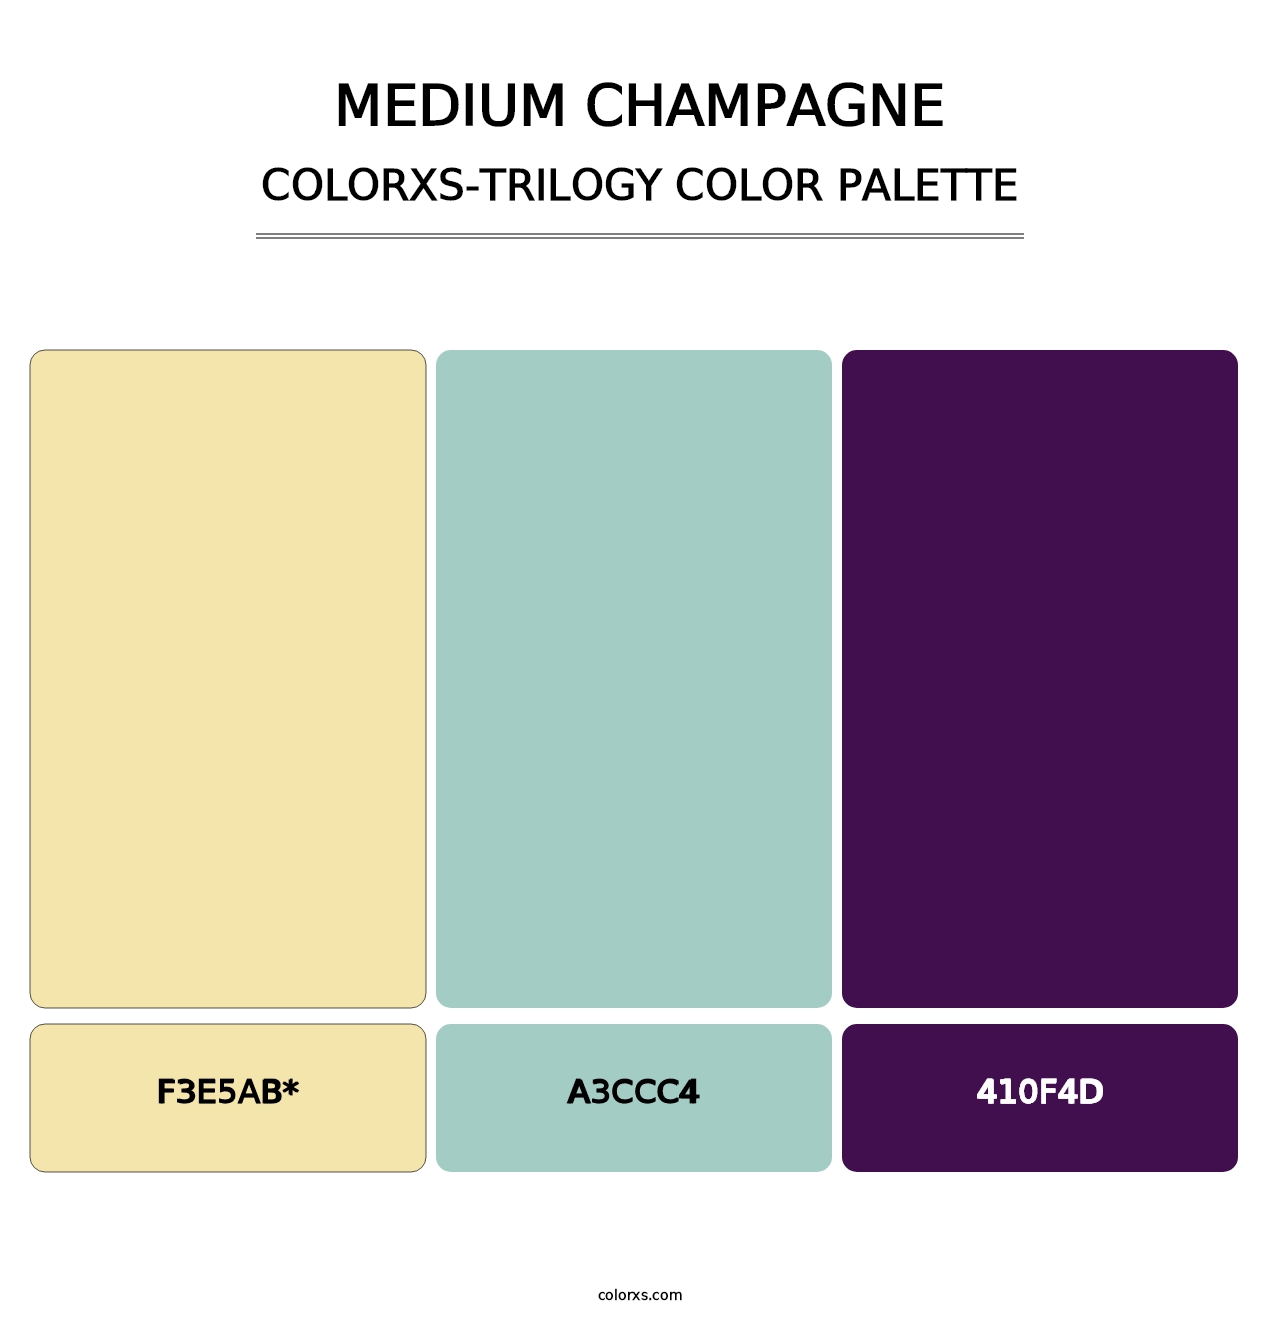 Medium Champagne - Colorxs Trilogy Palette